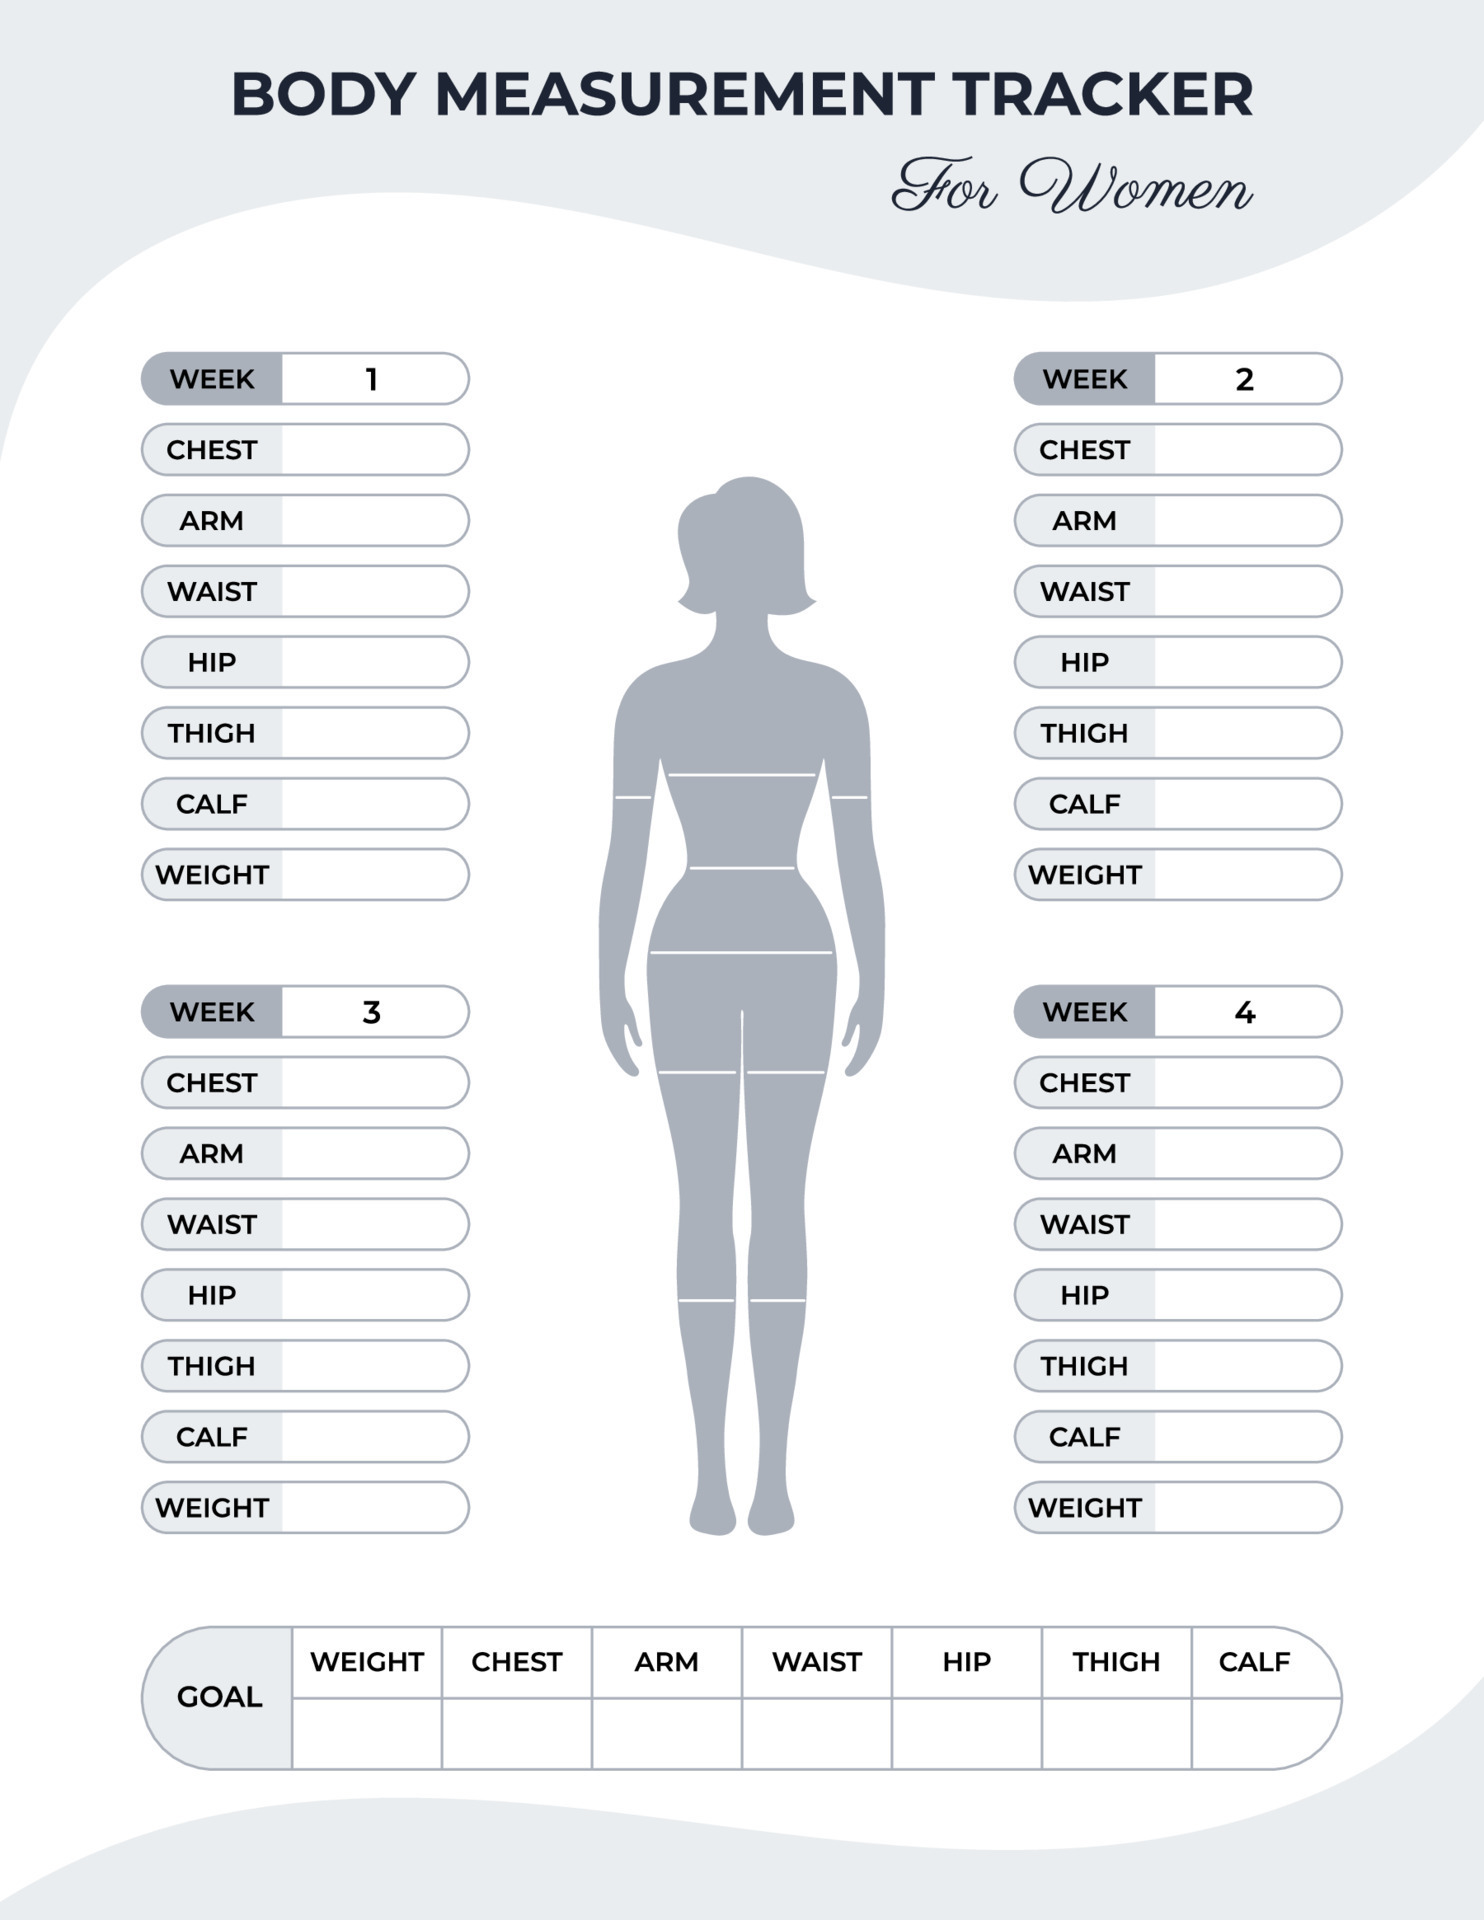 https://static.vecteezy.com/system/resources/previews/008/731/659/original/body-measurement-tracker-for-women-weight-loss-tracker-vector.jpg